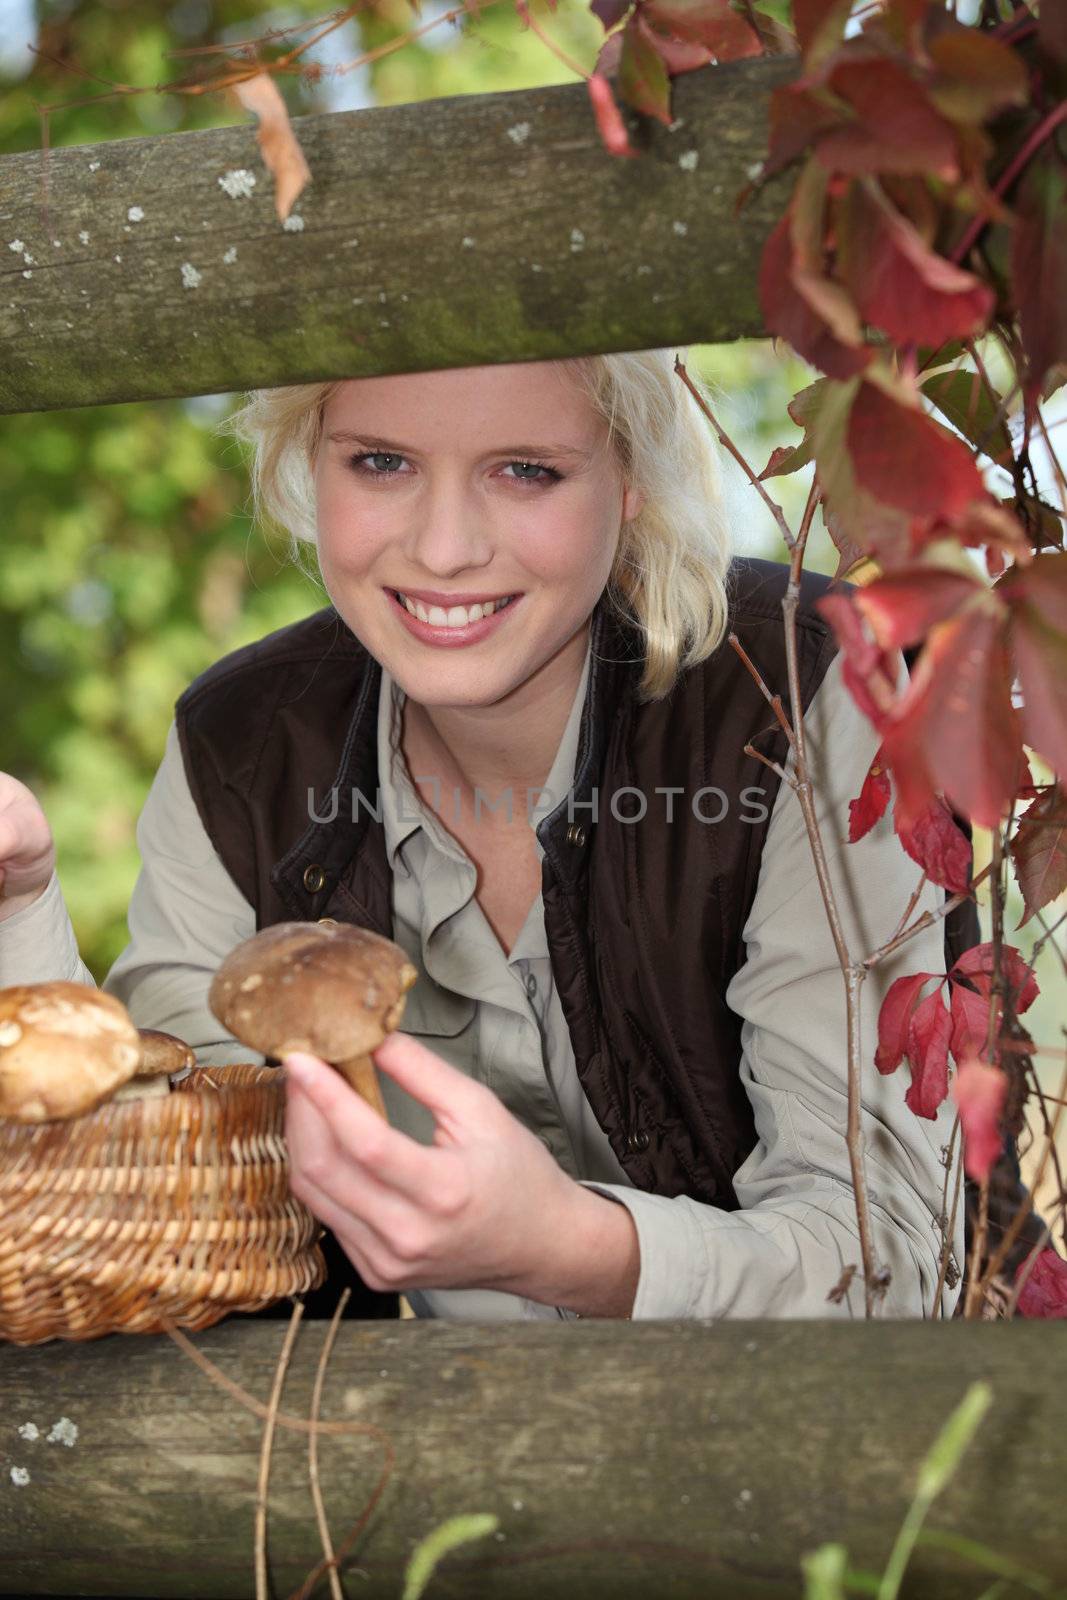 mushroom picking by phovoir